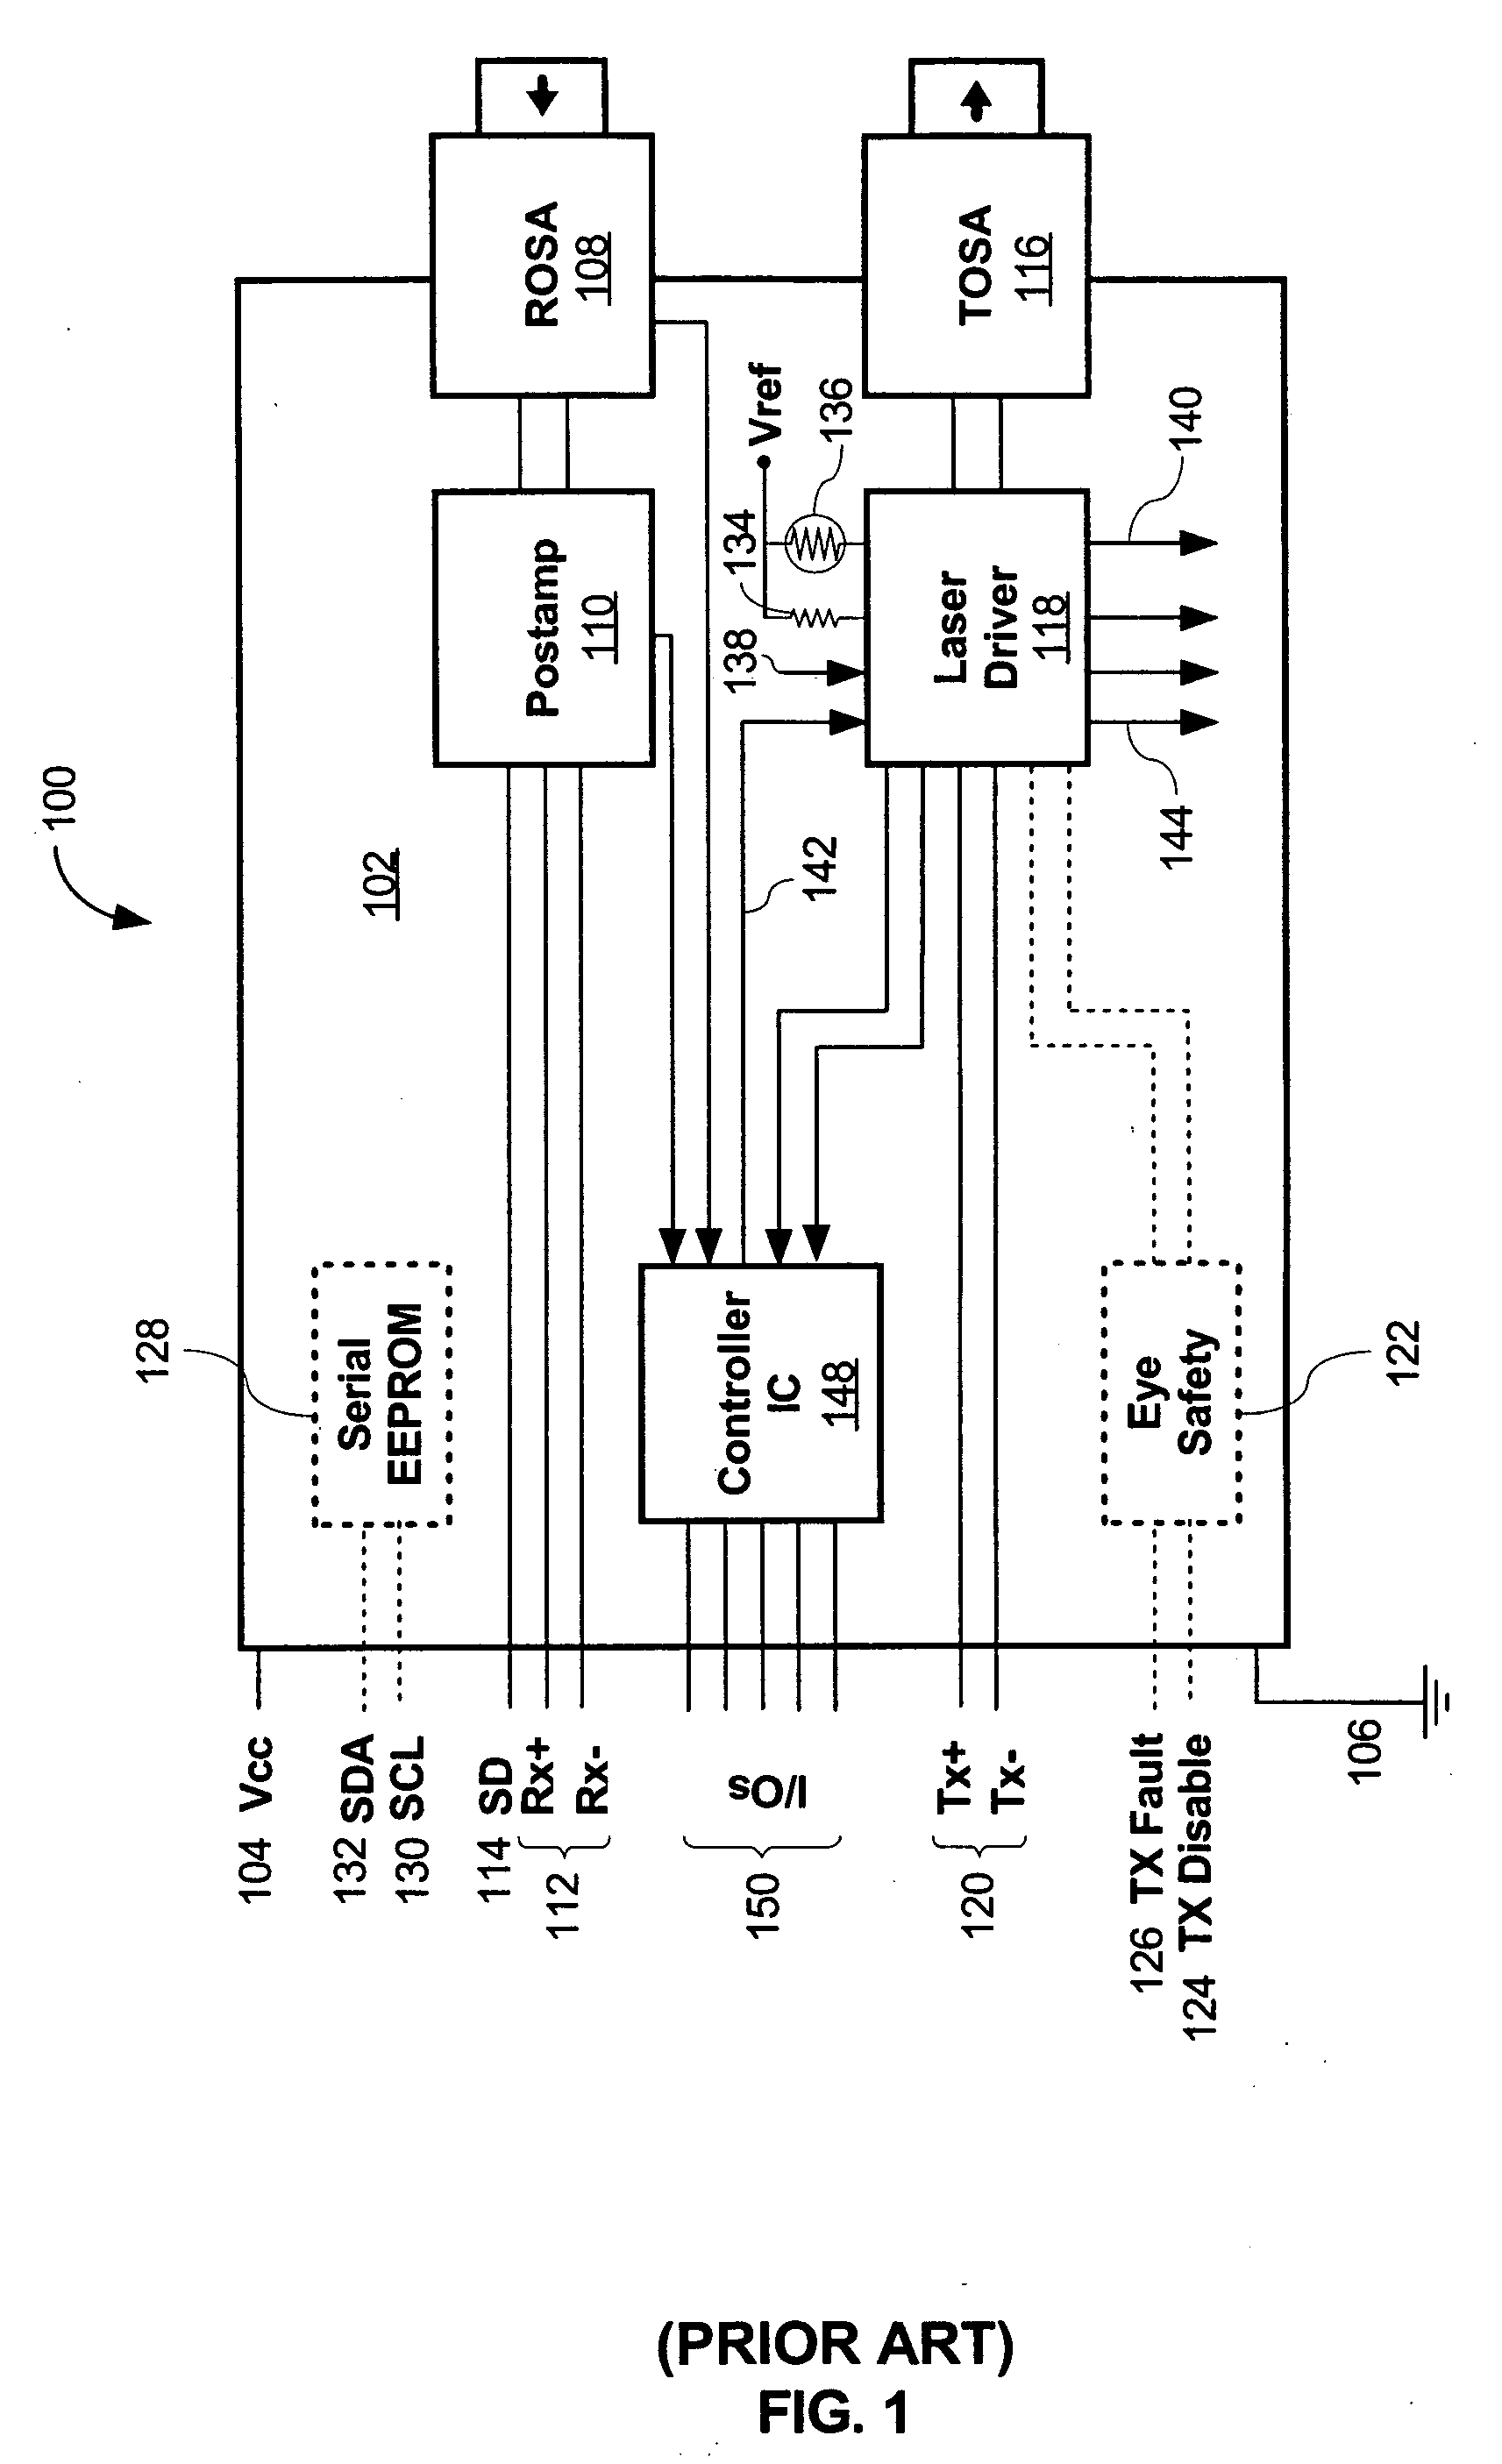 Optical transceiver module with multipurpose internal serial bus